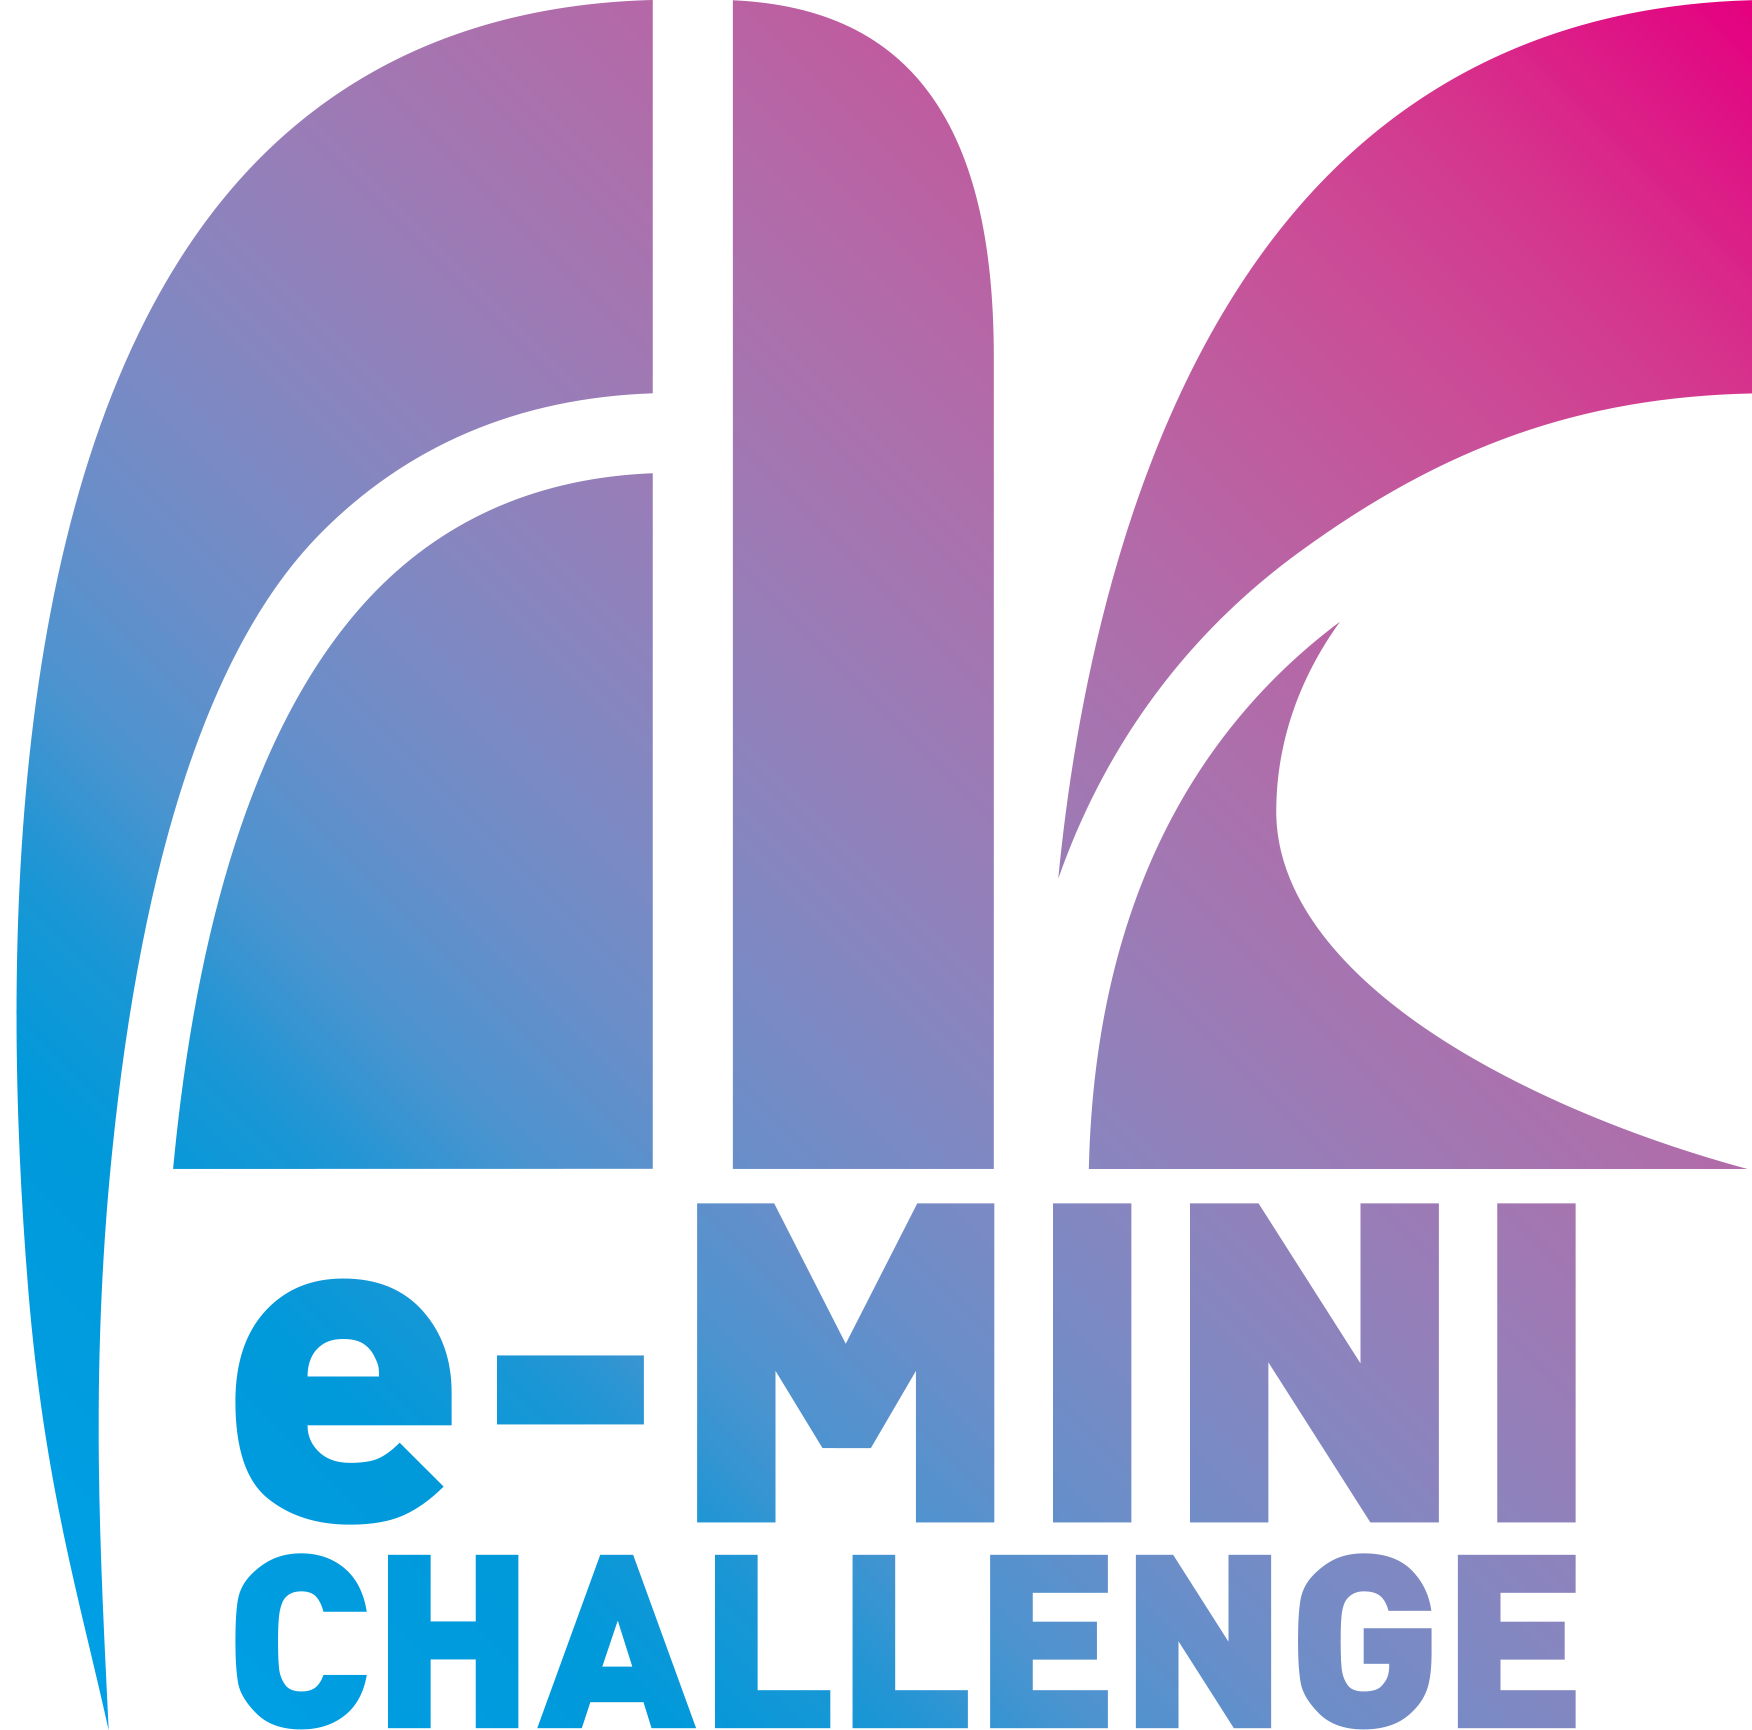 e-MINI CHALLENGE®2022 S1 Rd.7 A/B ポイントランキング公開